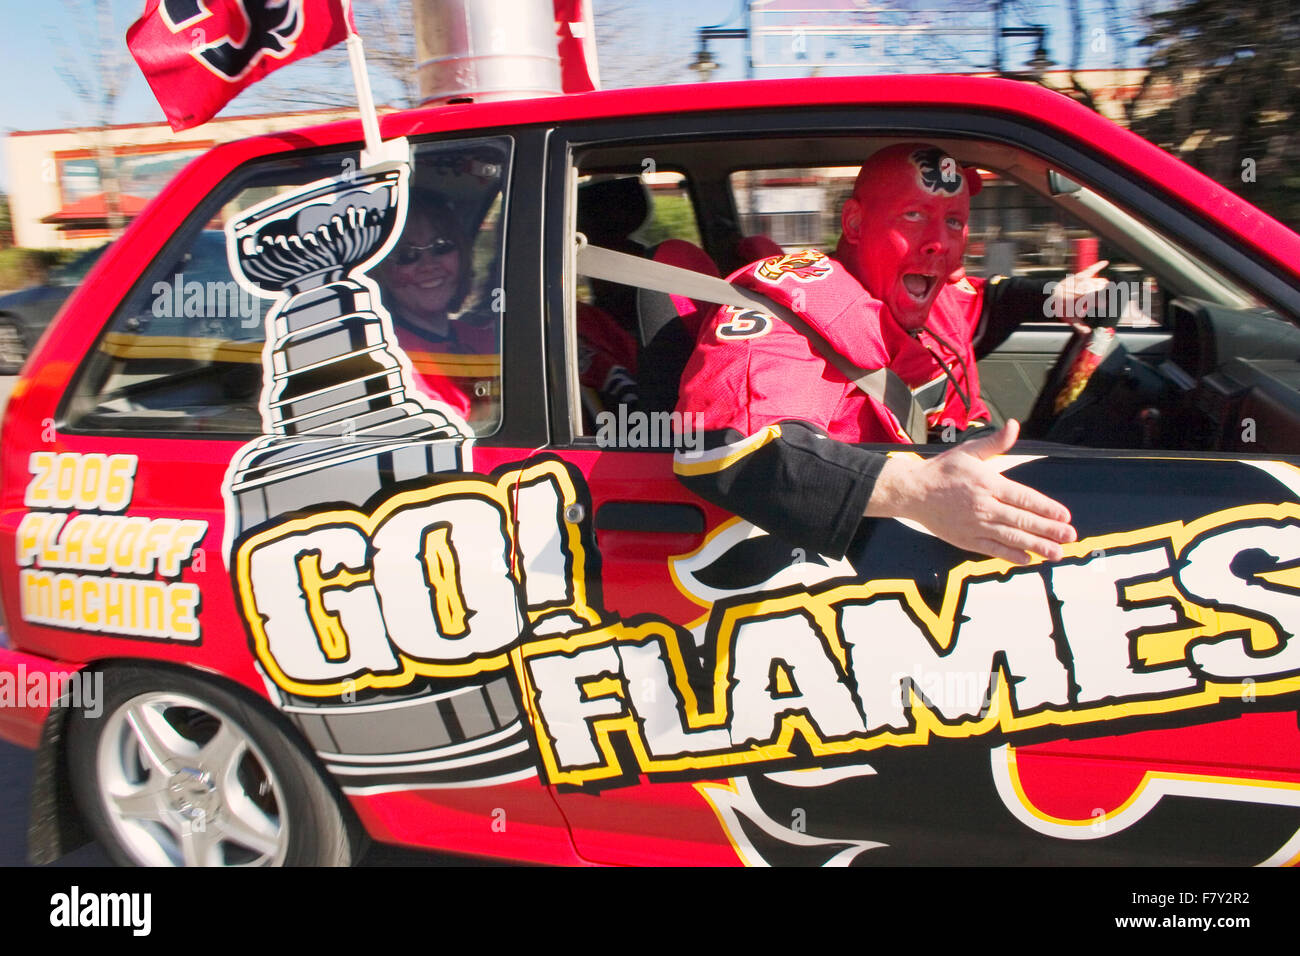 Calgary Flames - Flames fans – head to FanAttic at North Hill